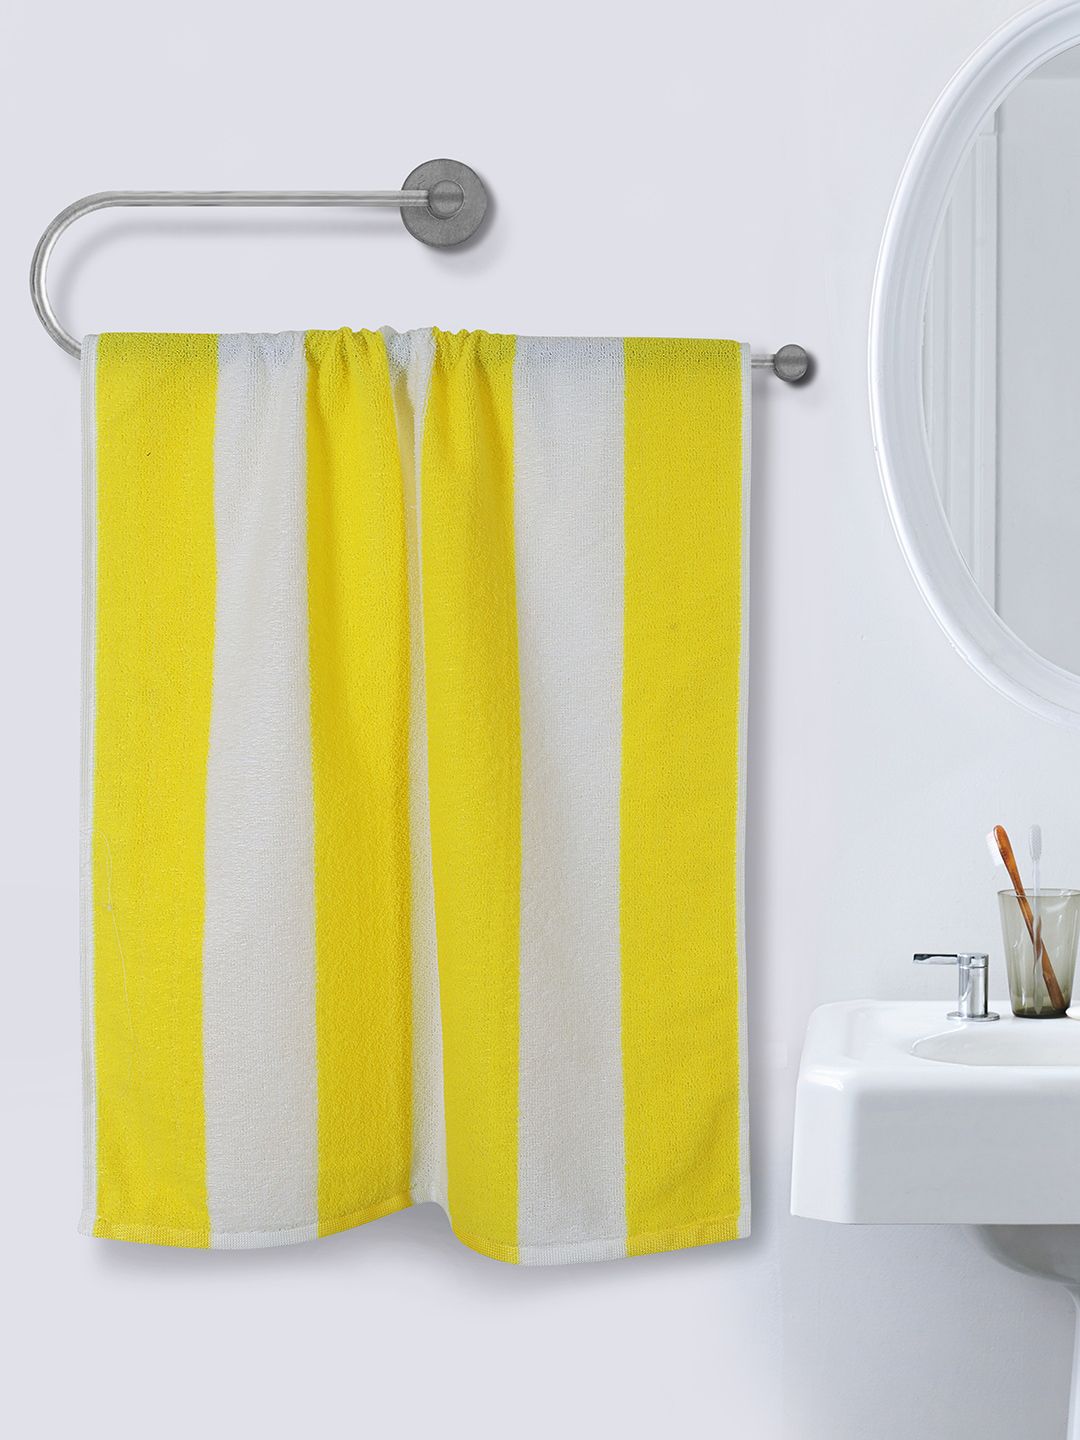 ROMEE Yellow & White Striped 500 GSM Microfiber Bath Towel Price in India